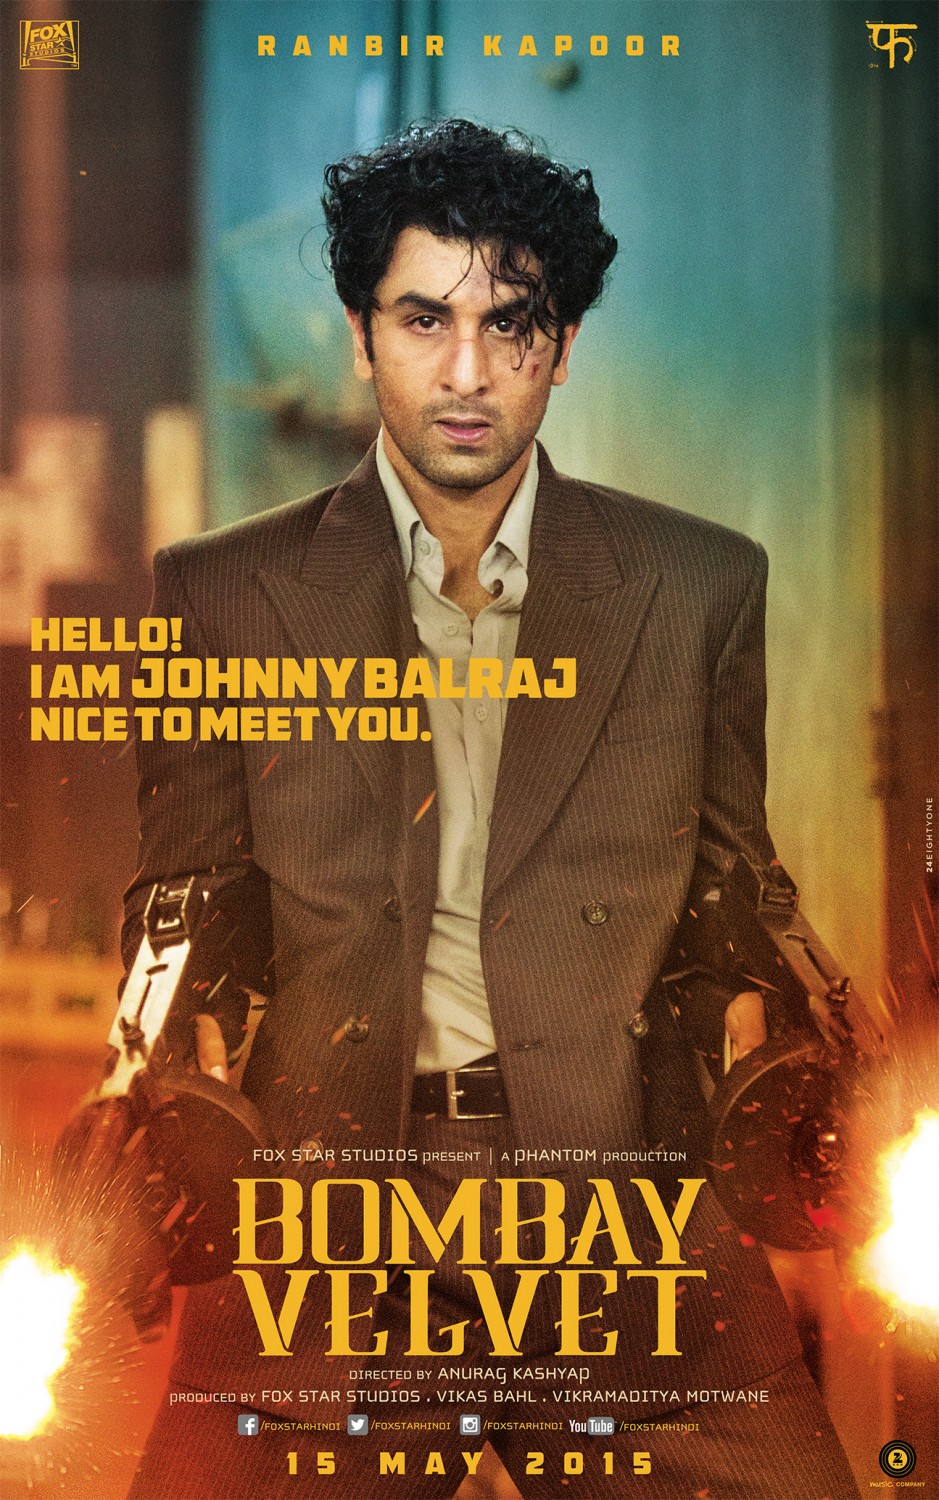 Extra Large Movie Poster Image for Bombay Velvet (#1 of 8)